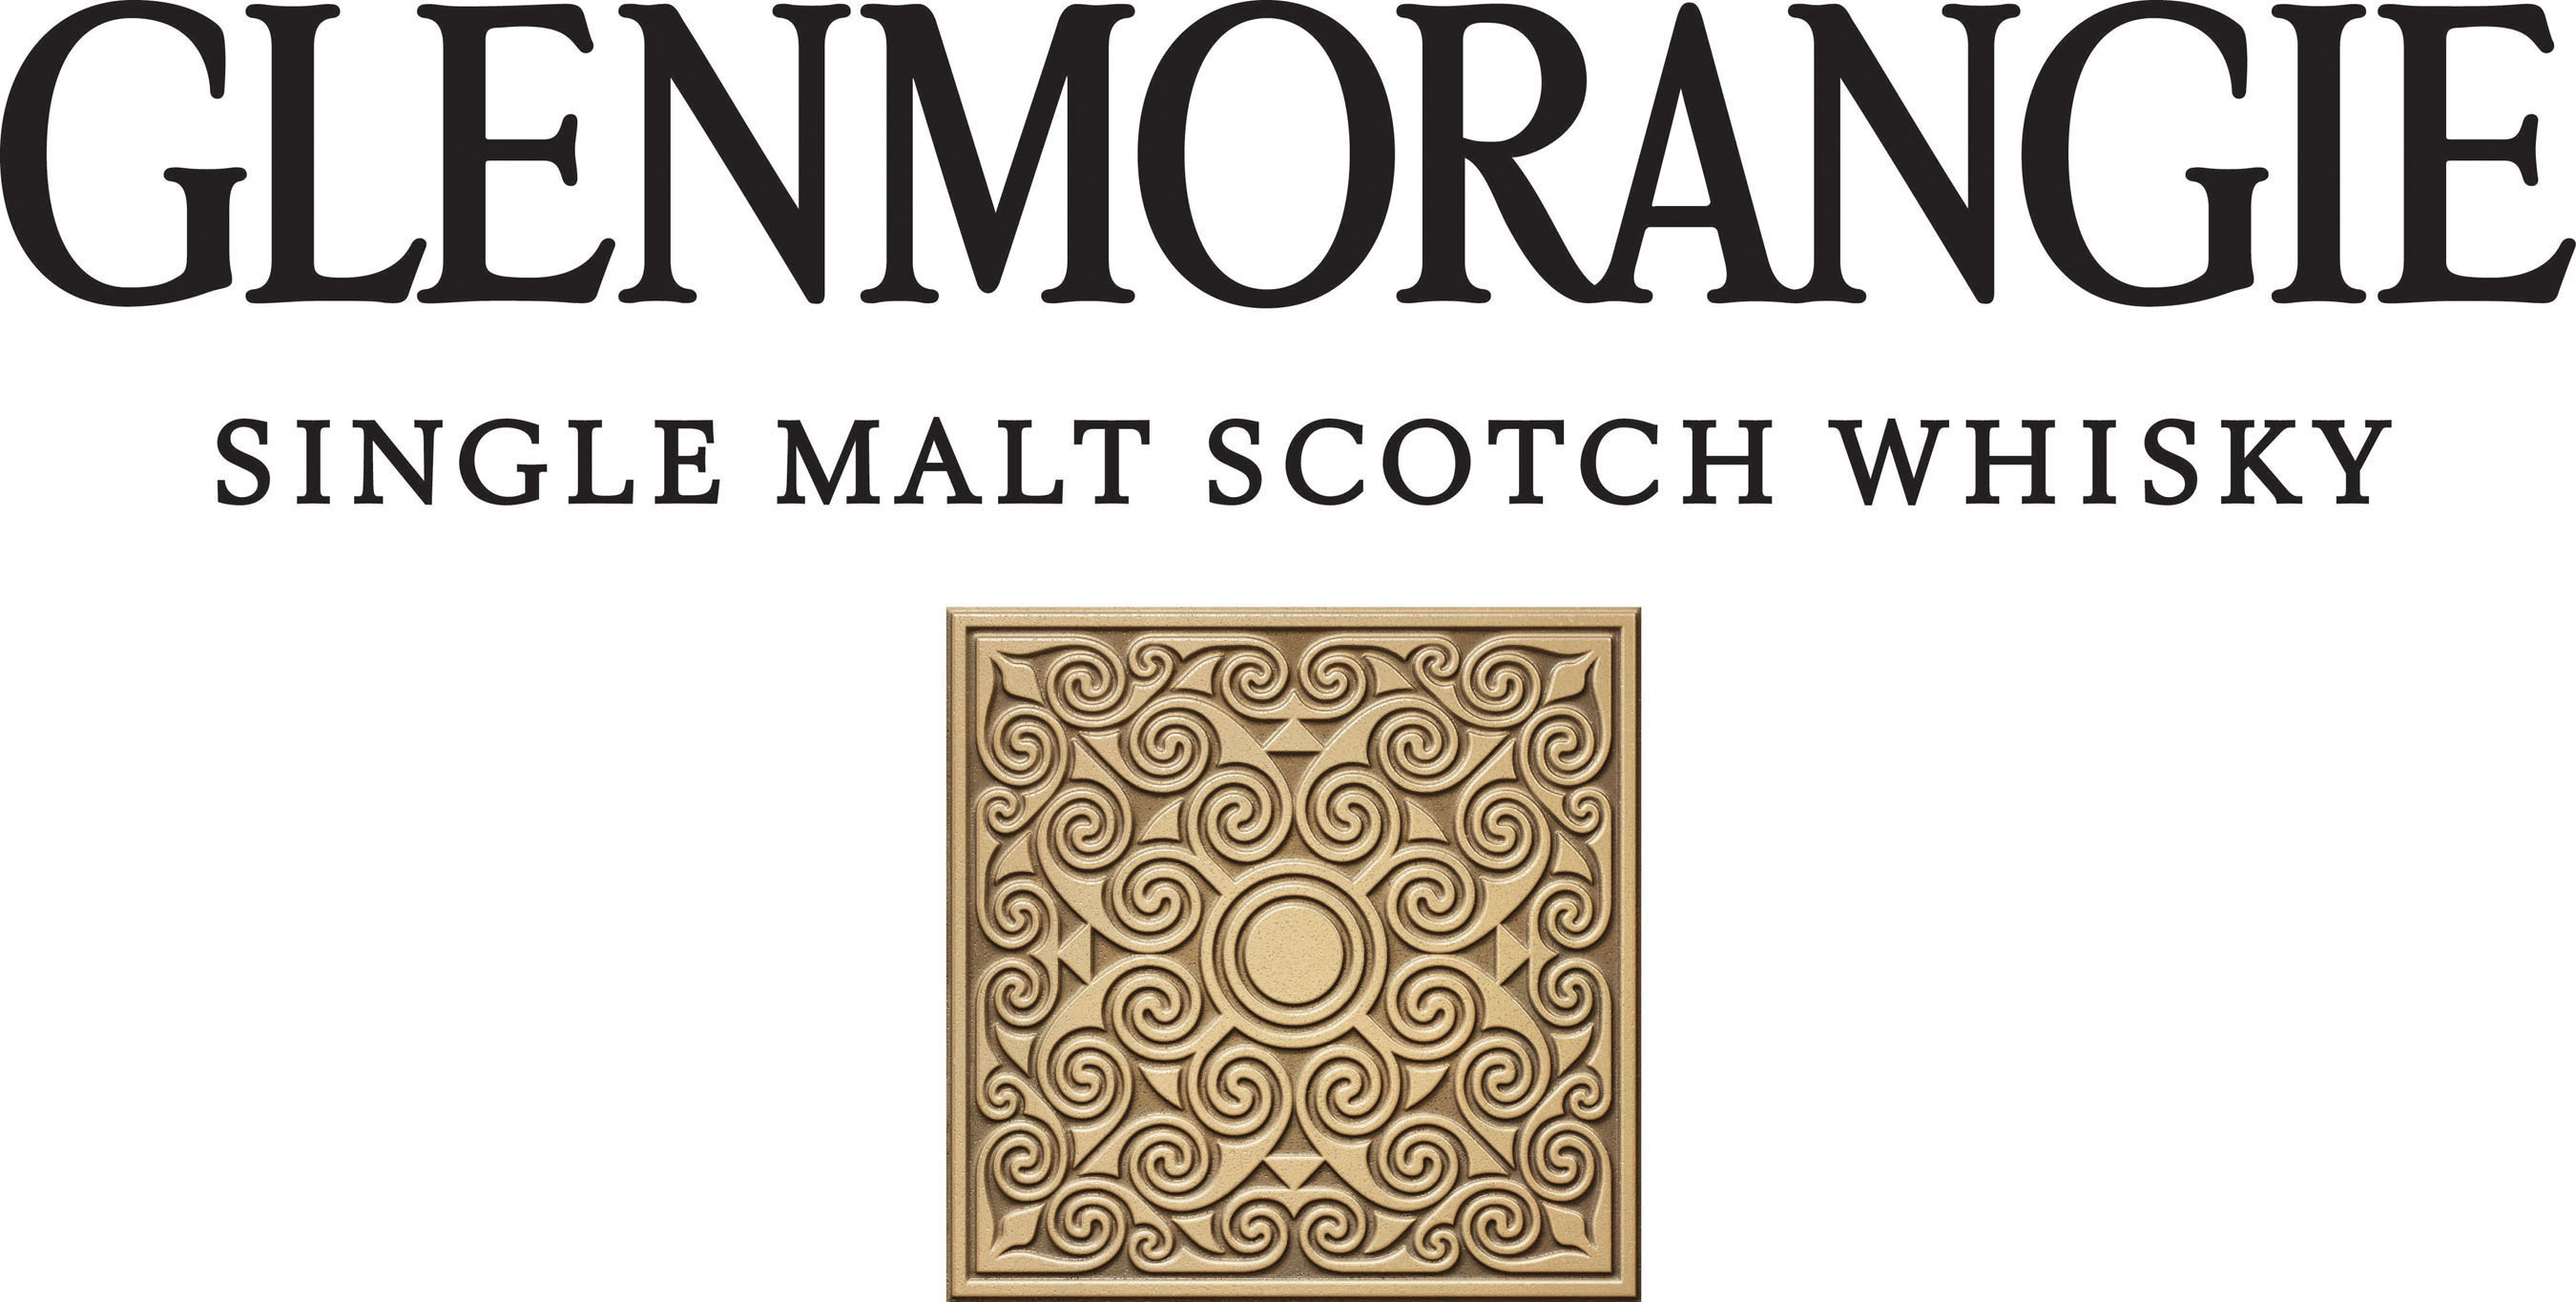 Glenmorangie Logo.